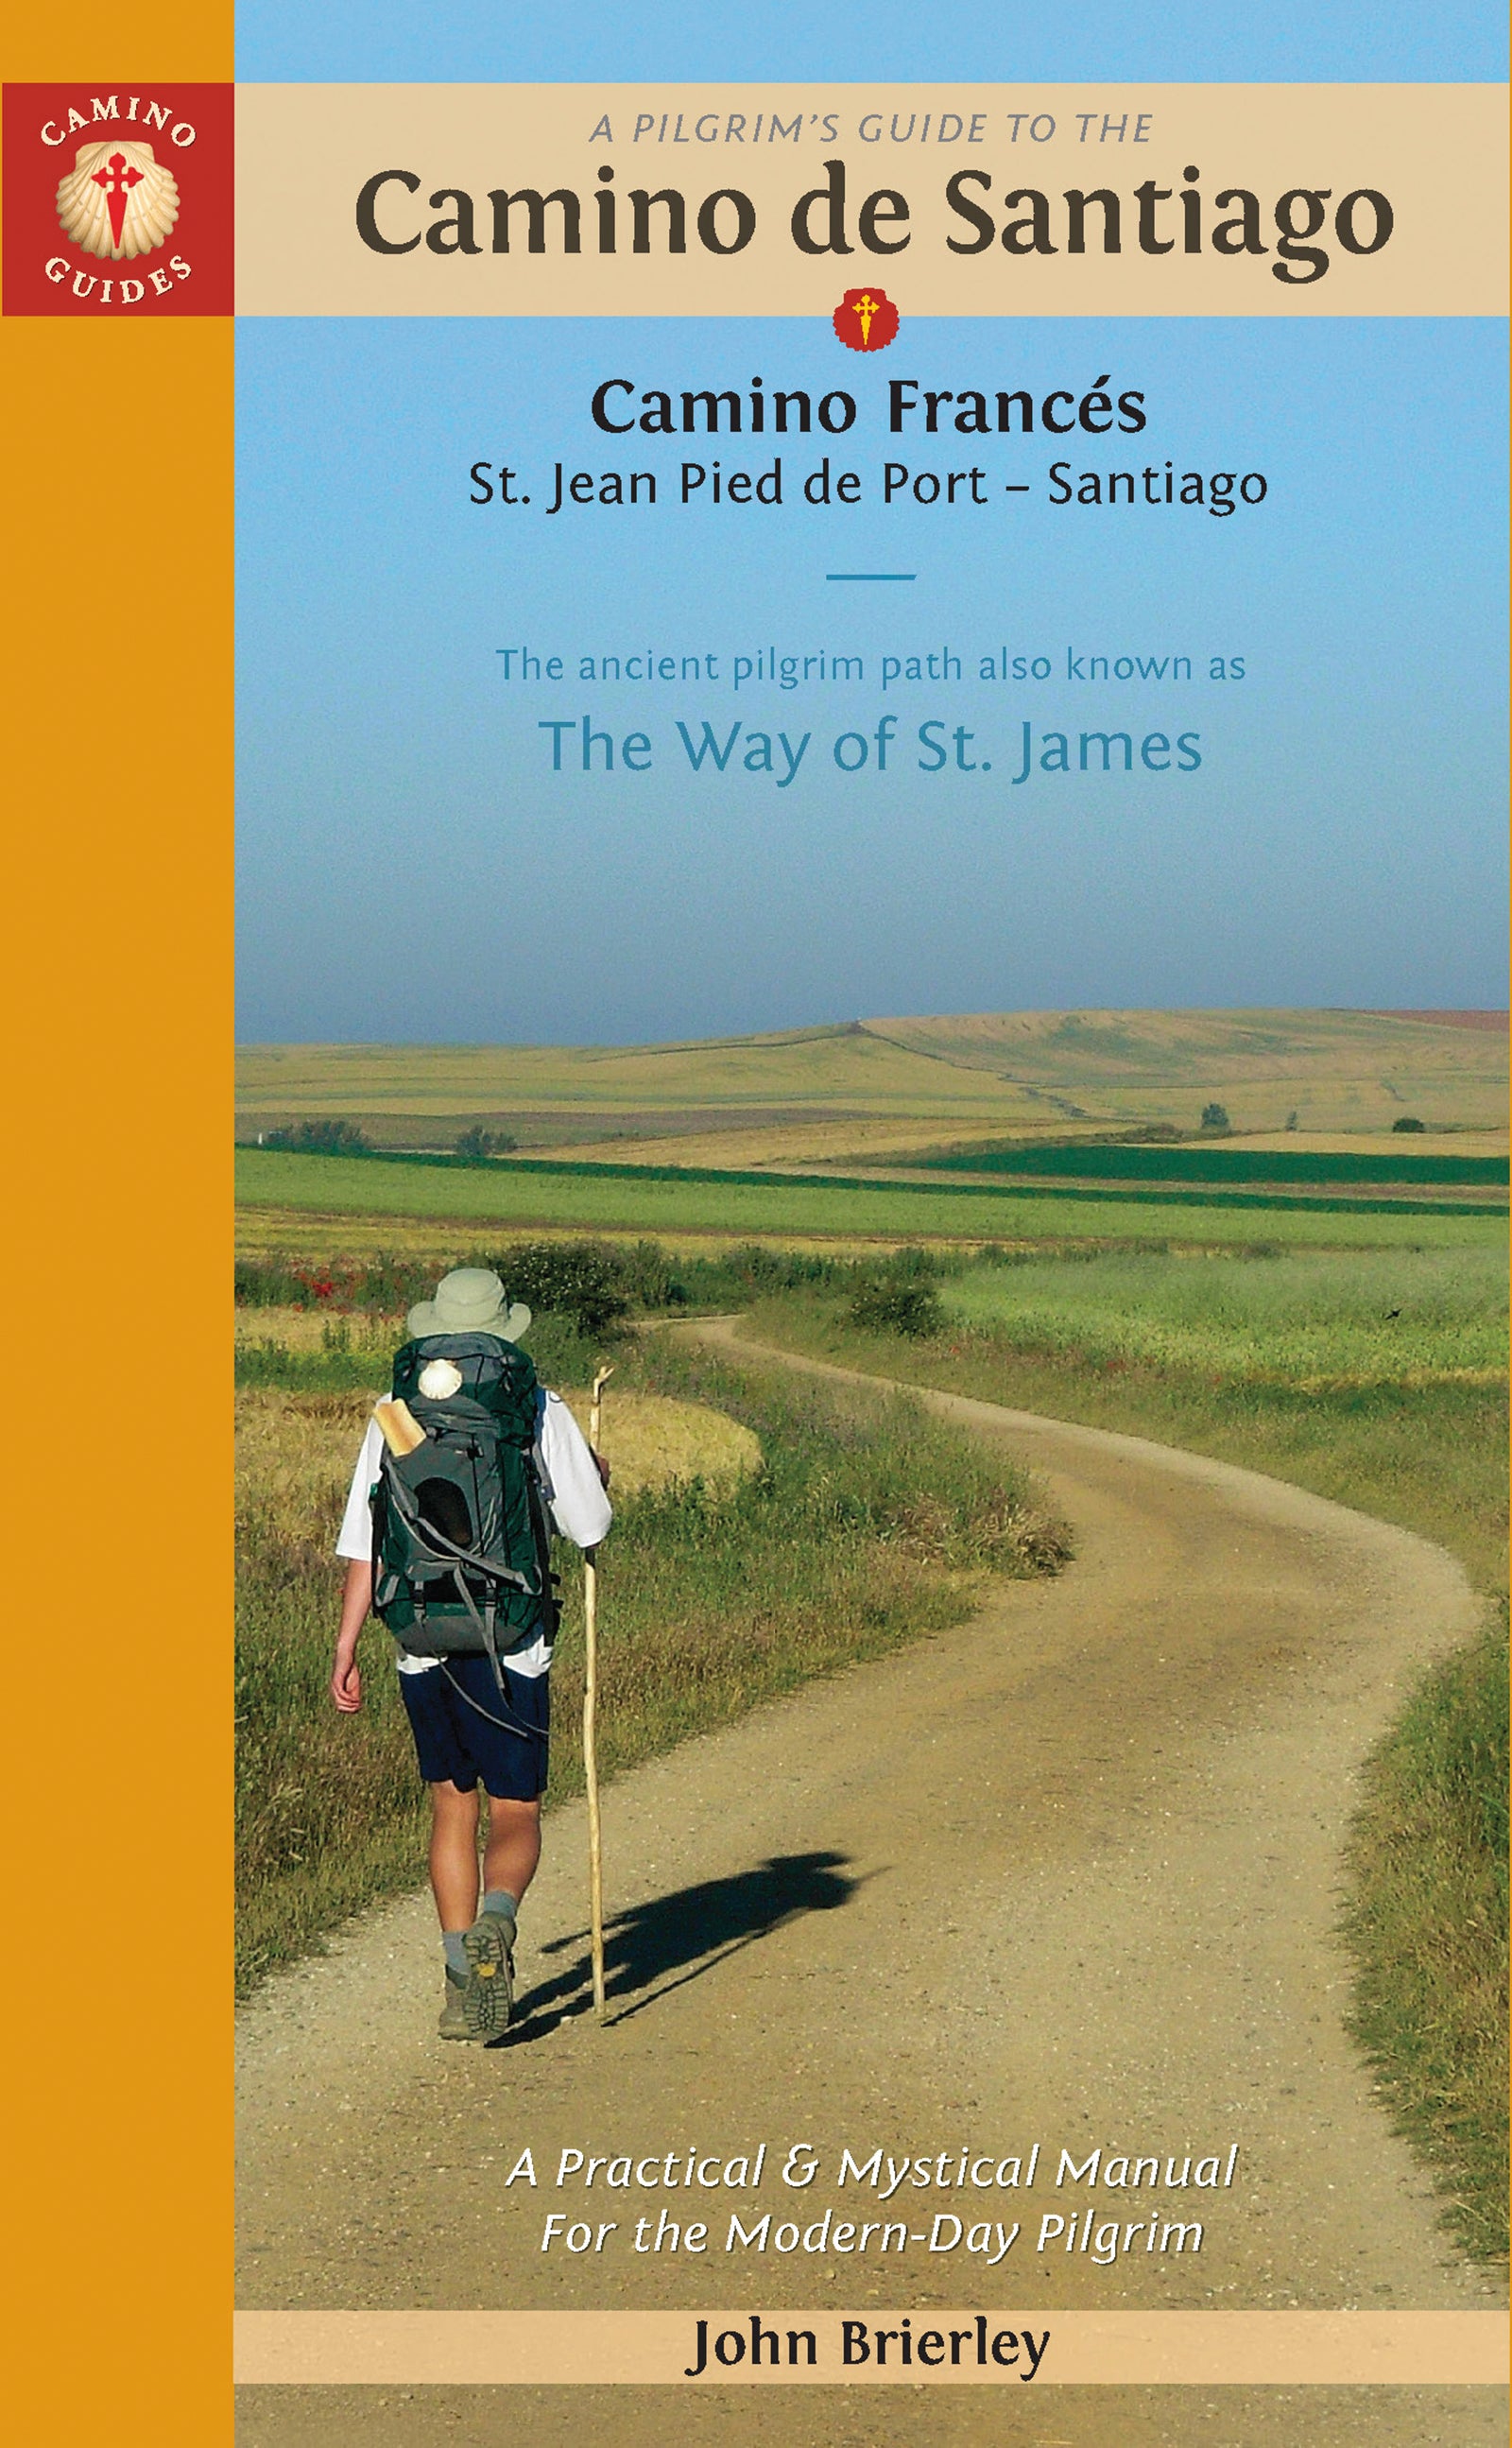 Camino Portugues, the sequel, starts today! – Wayfaring Sarah